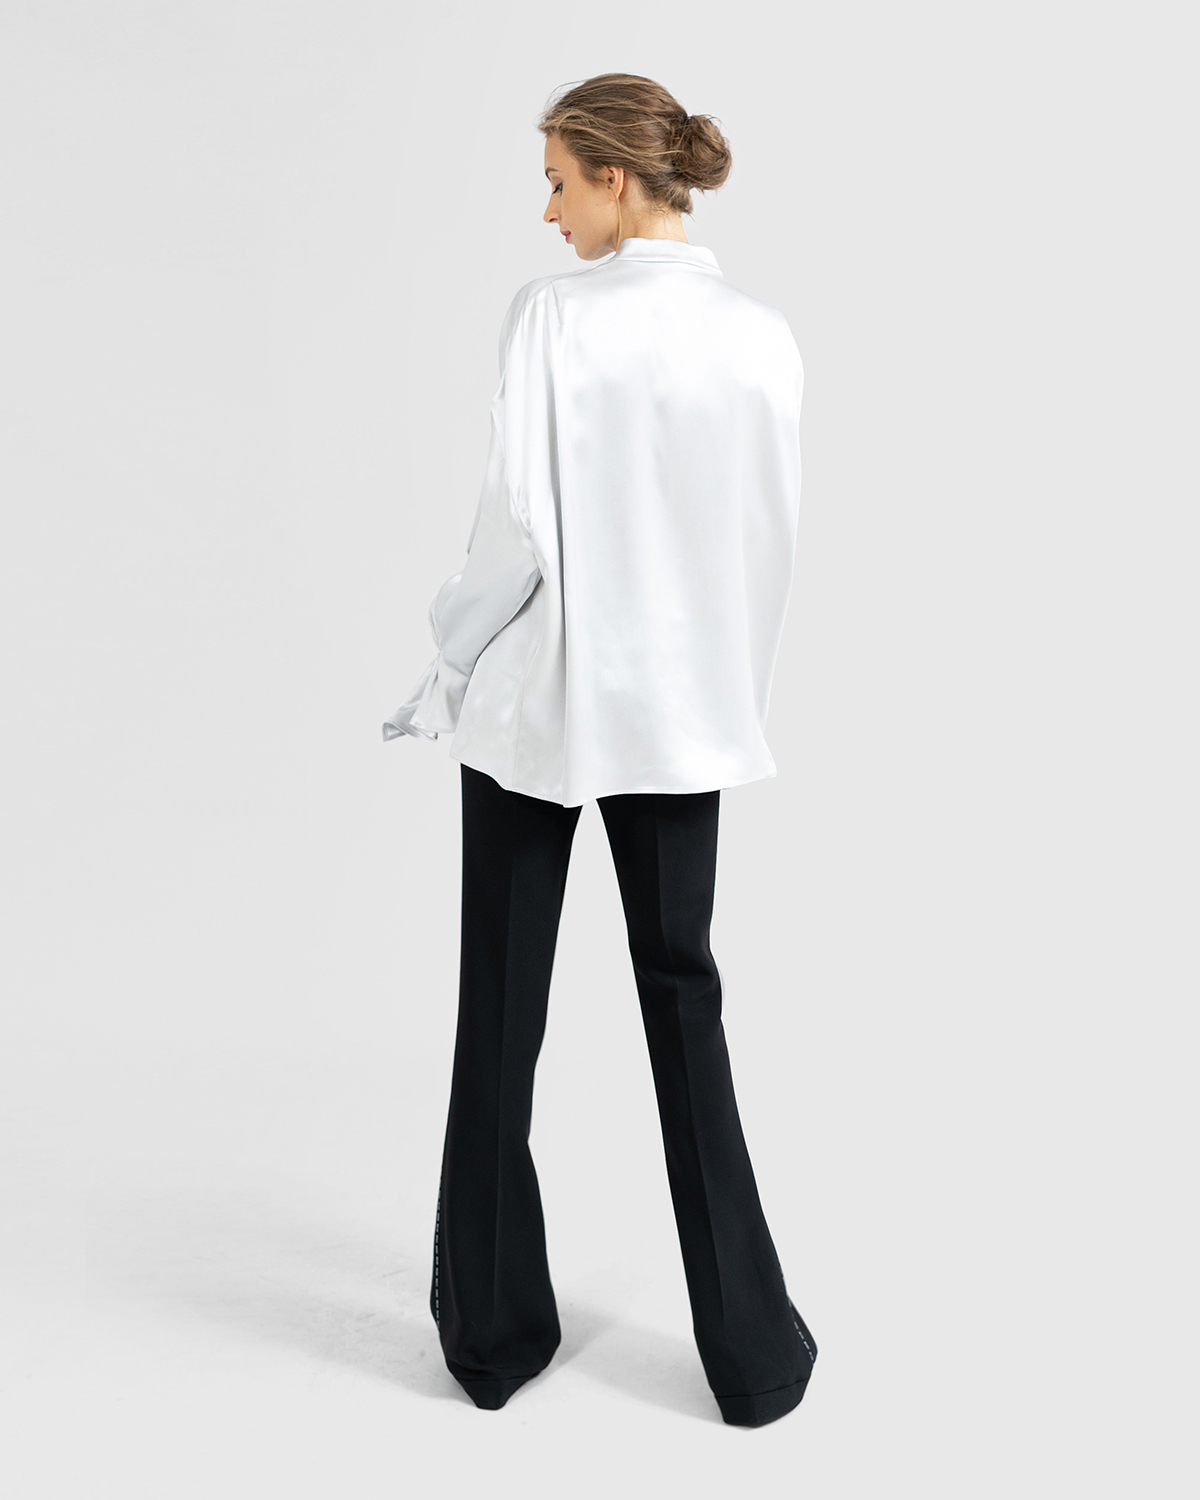 Grey sustainable silk blouse | The sustainable wardrobe | Genny